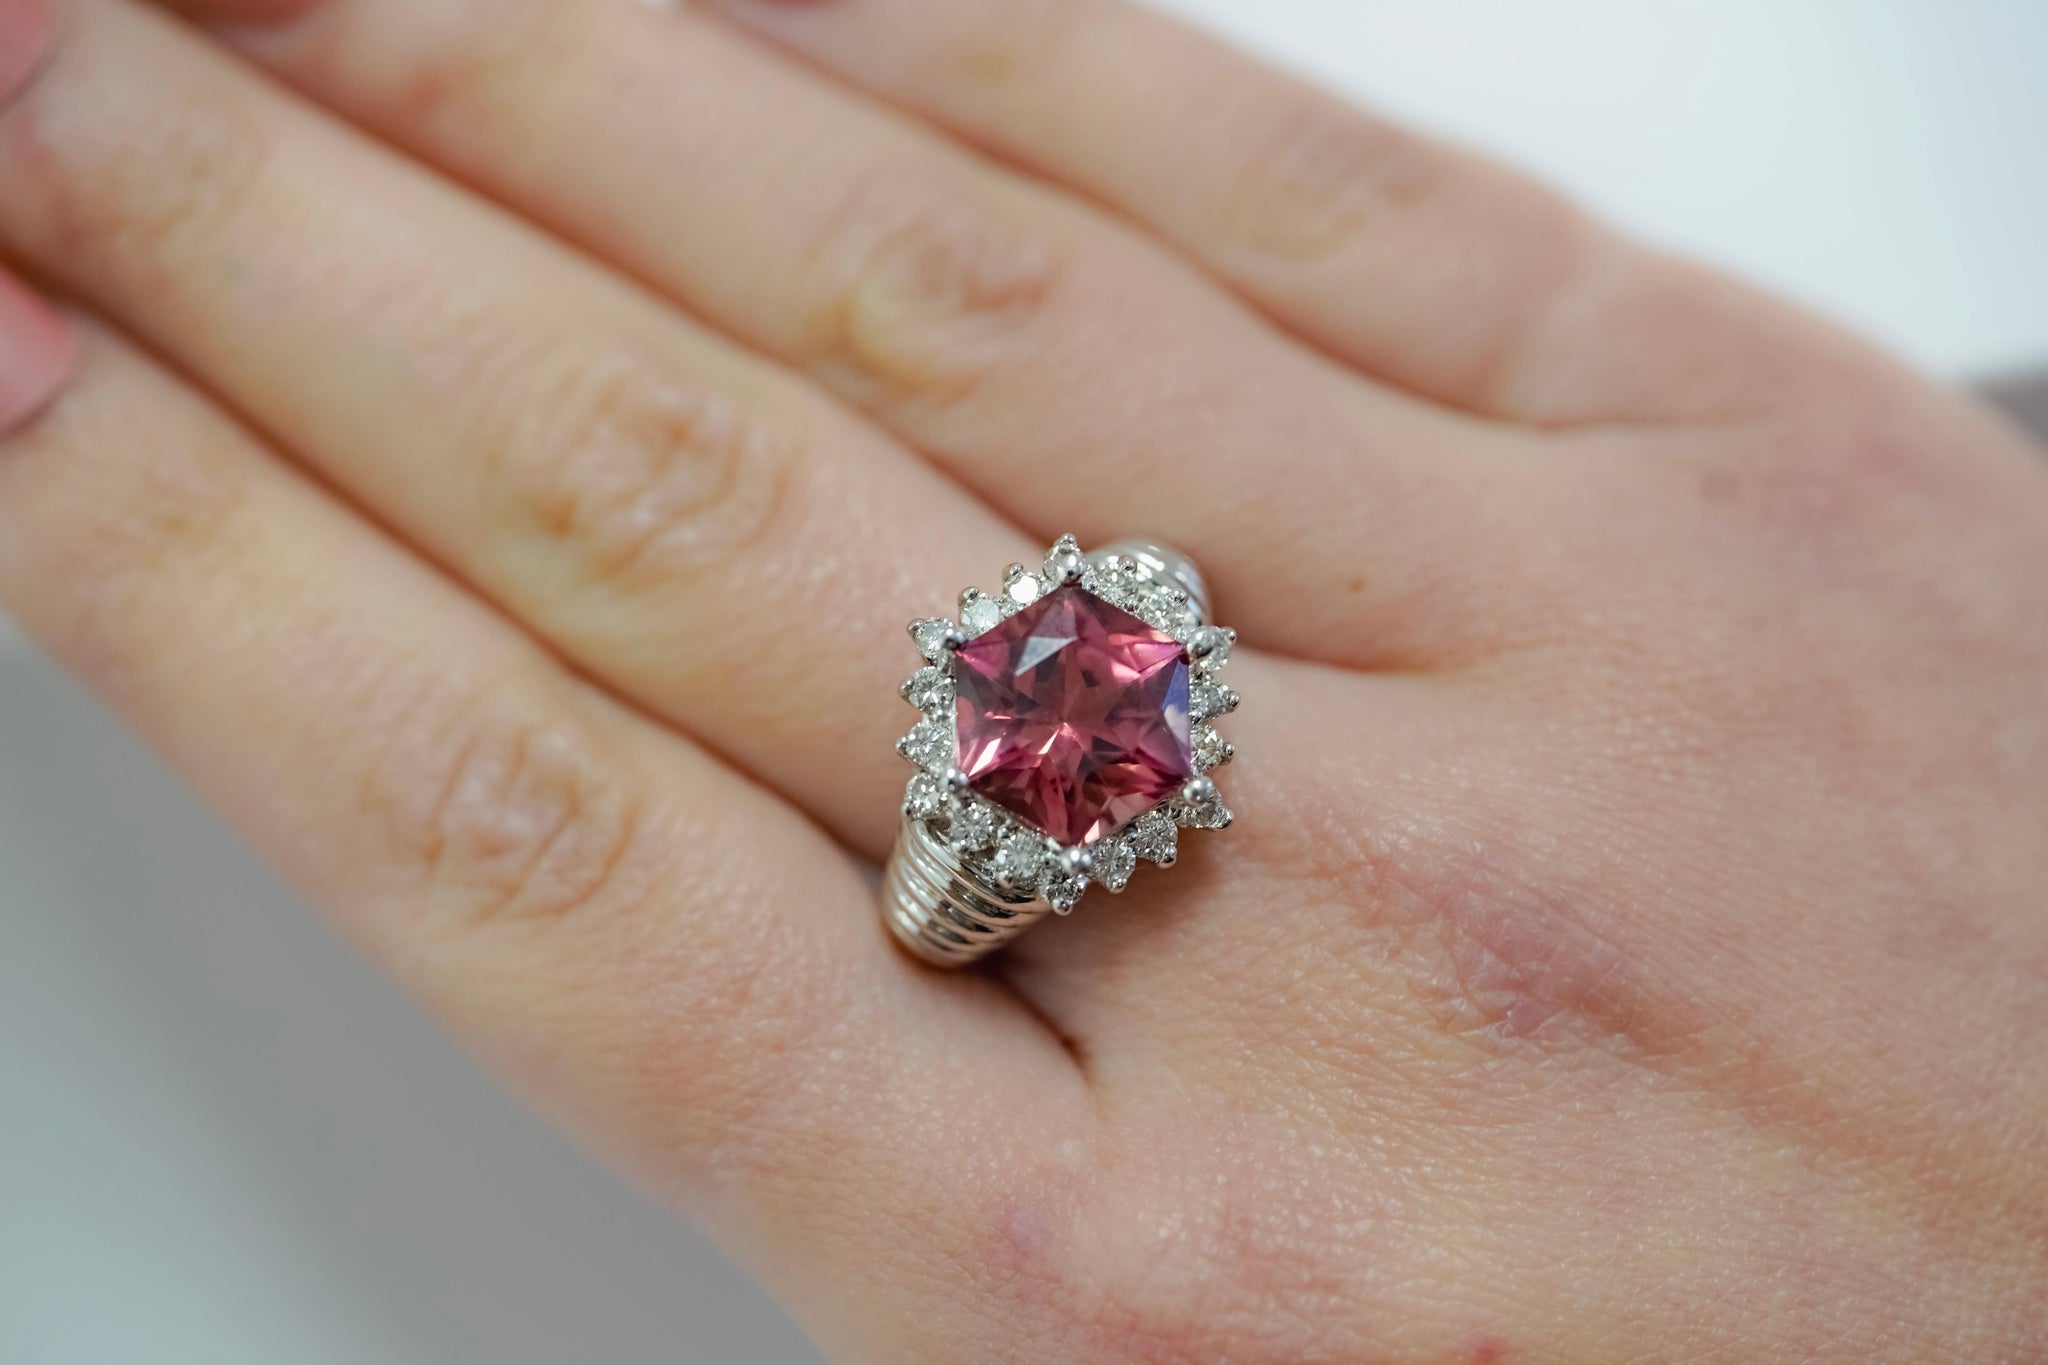 The Star Shaped Diamond Ring with Light Pink Round Diamonds